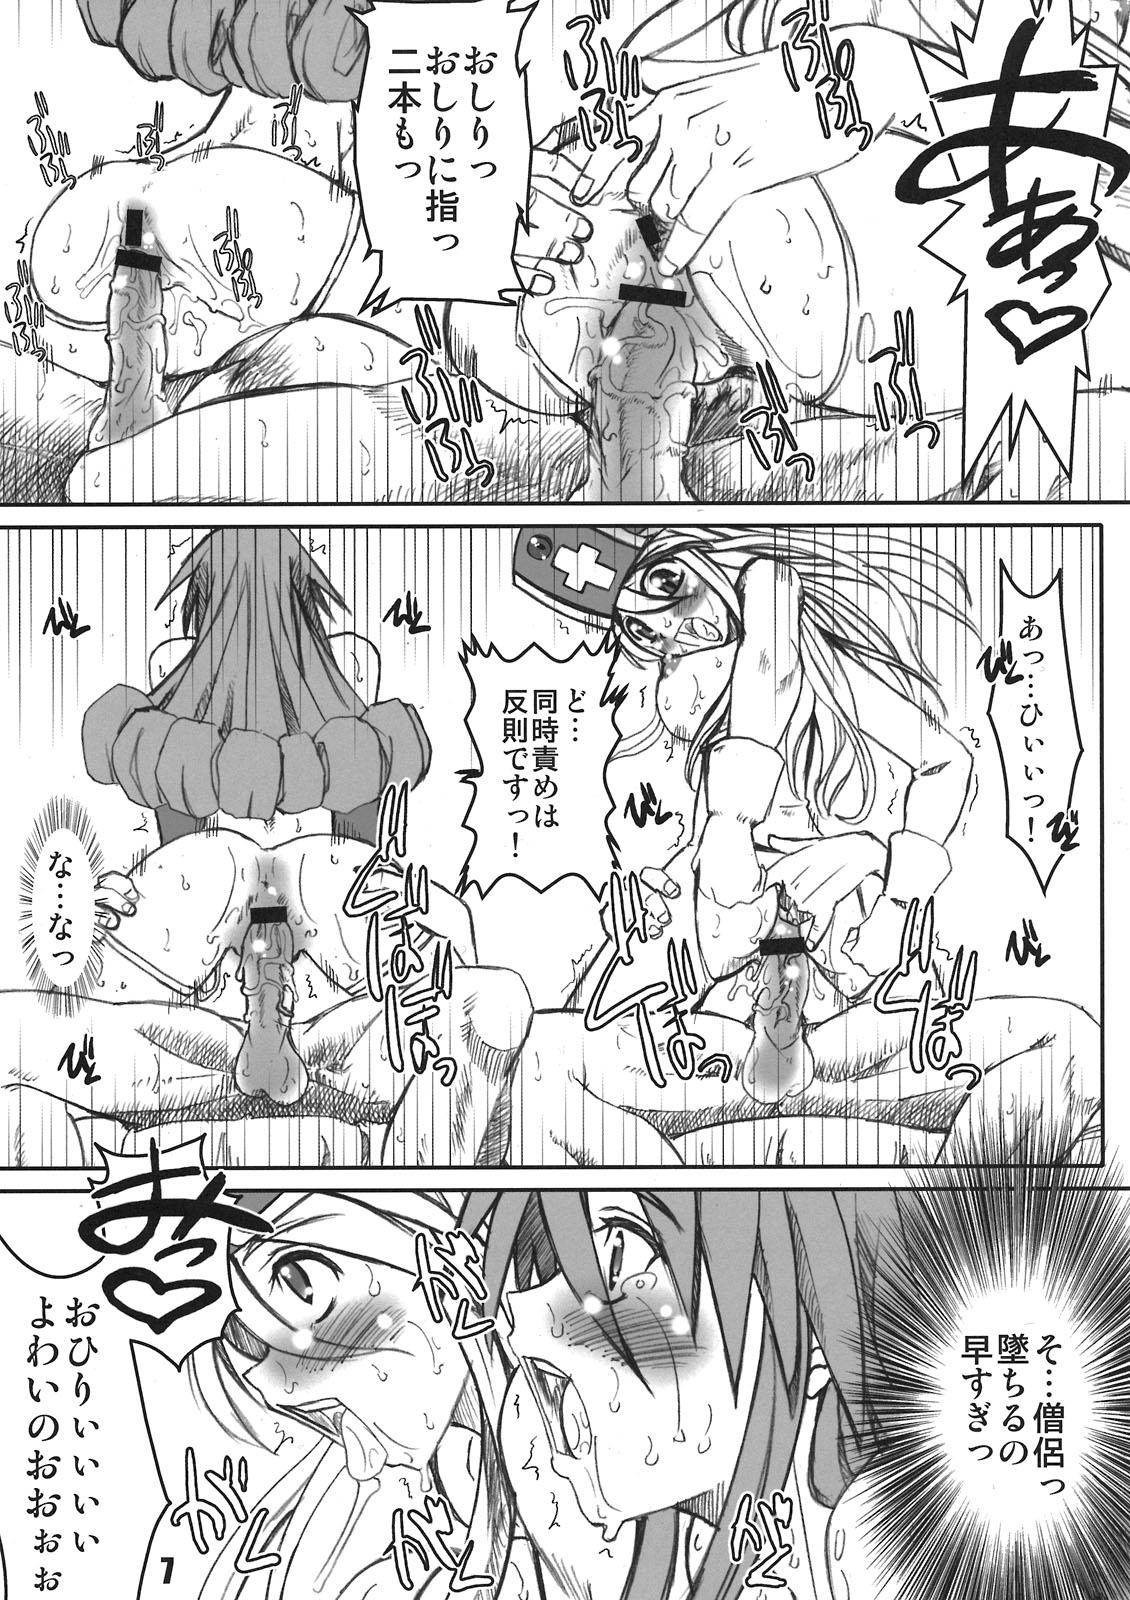 Masturbandose PULP Midnight Quest III - Dragon quest iii Female - Page 7